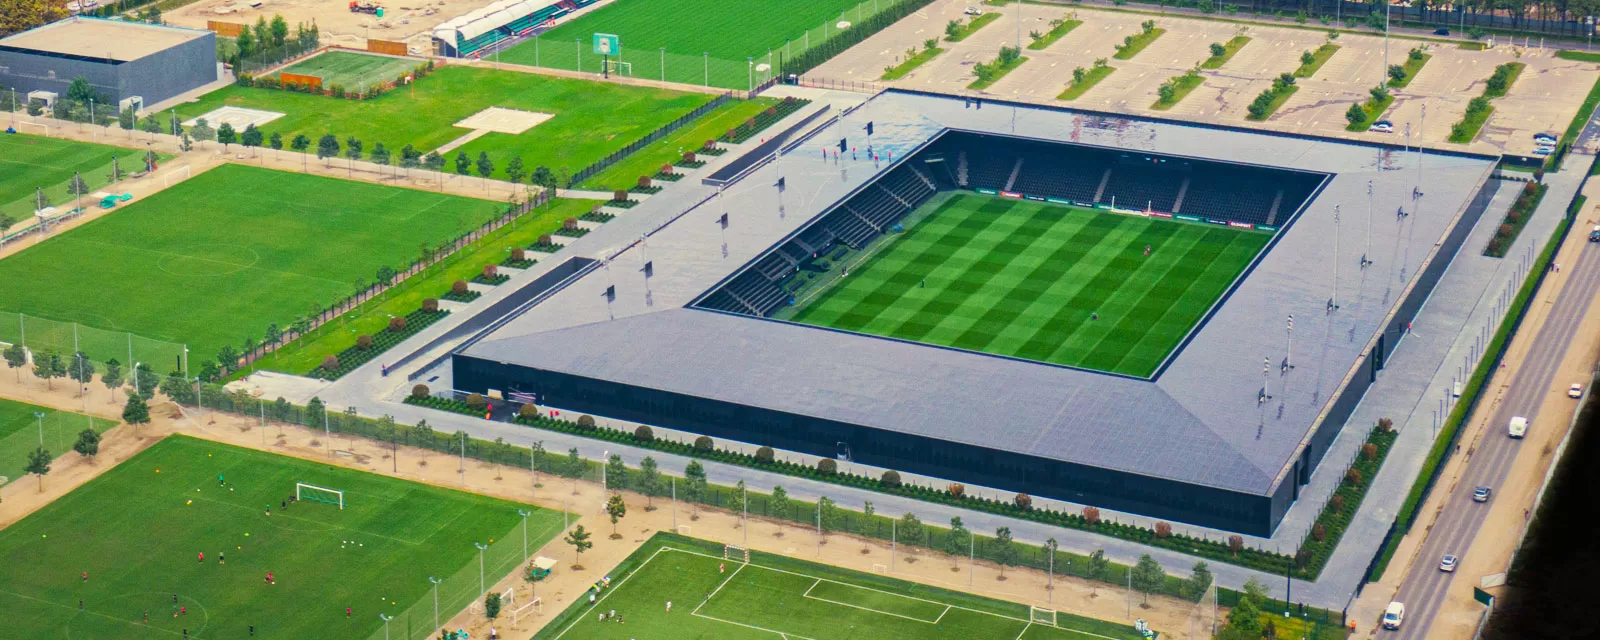 Стадион Академии Футбольного клуба «Краснодар»